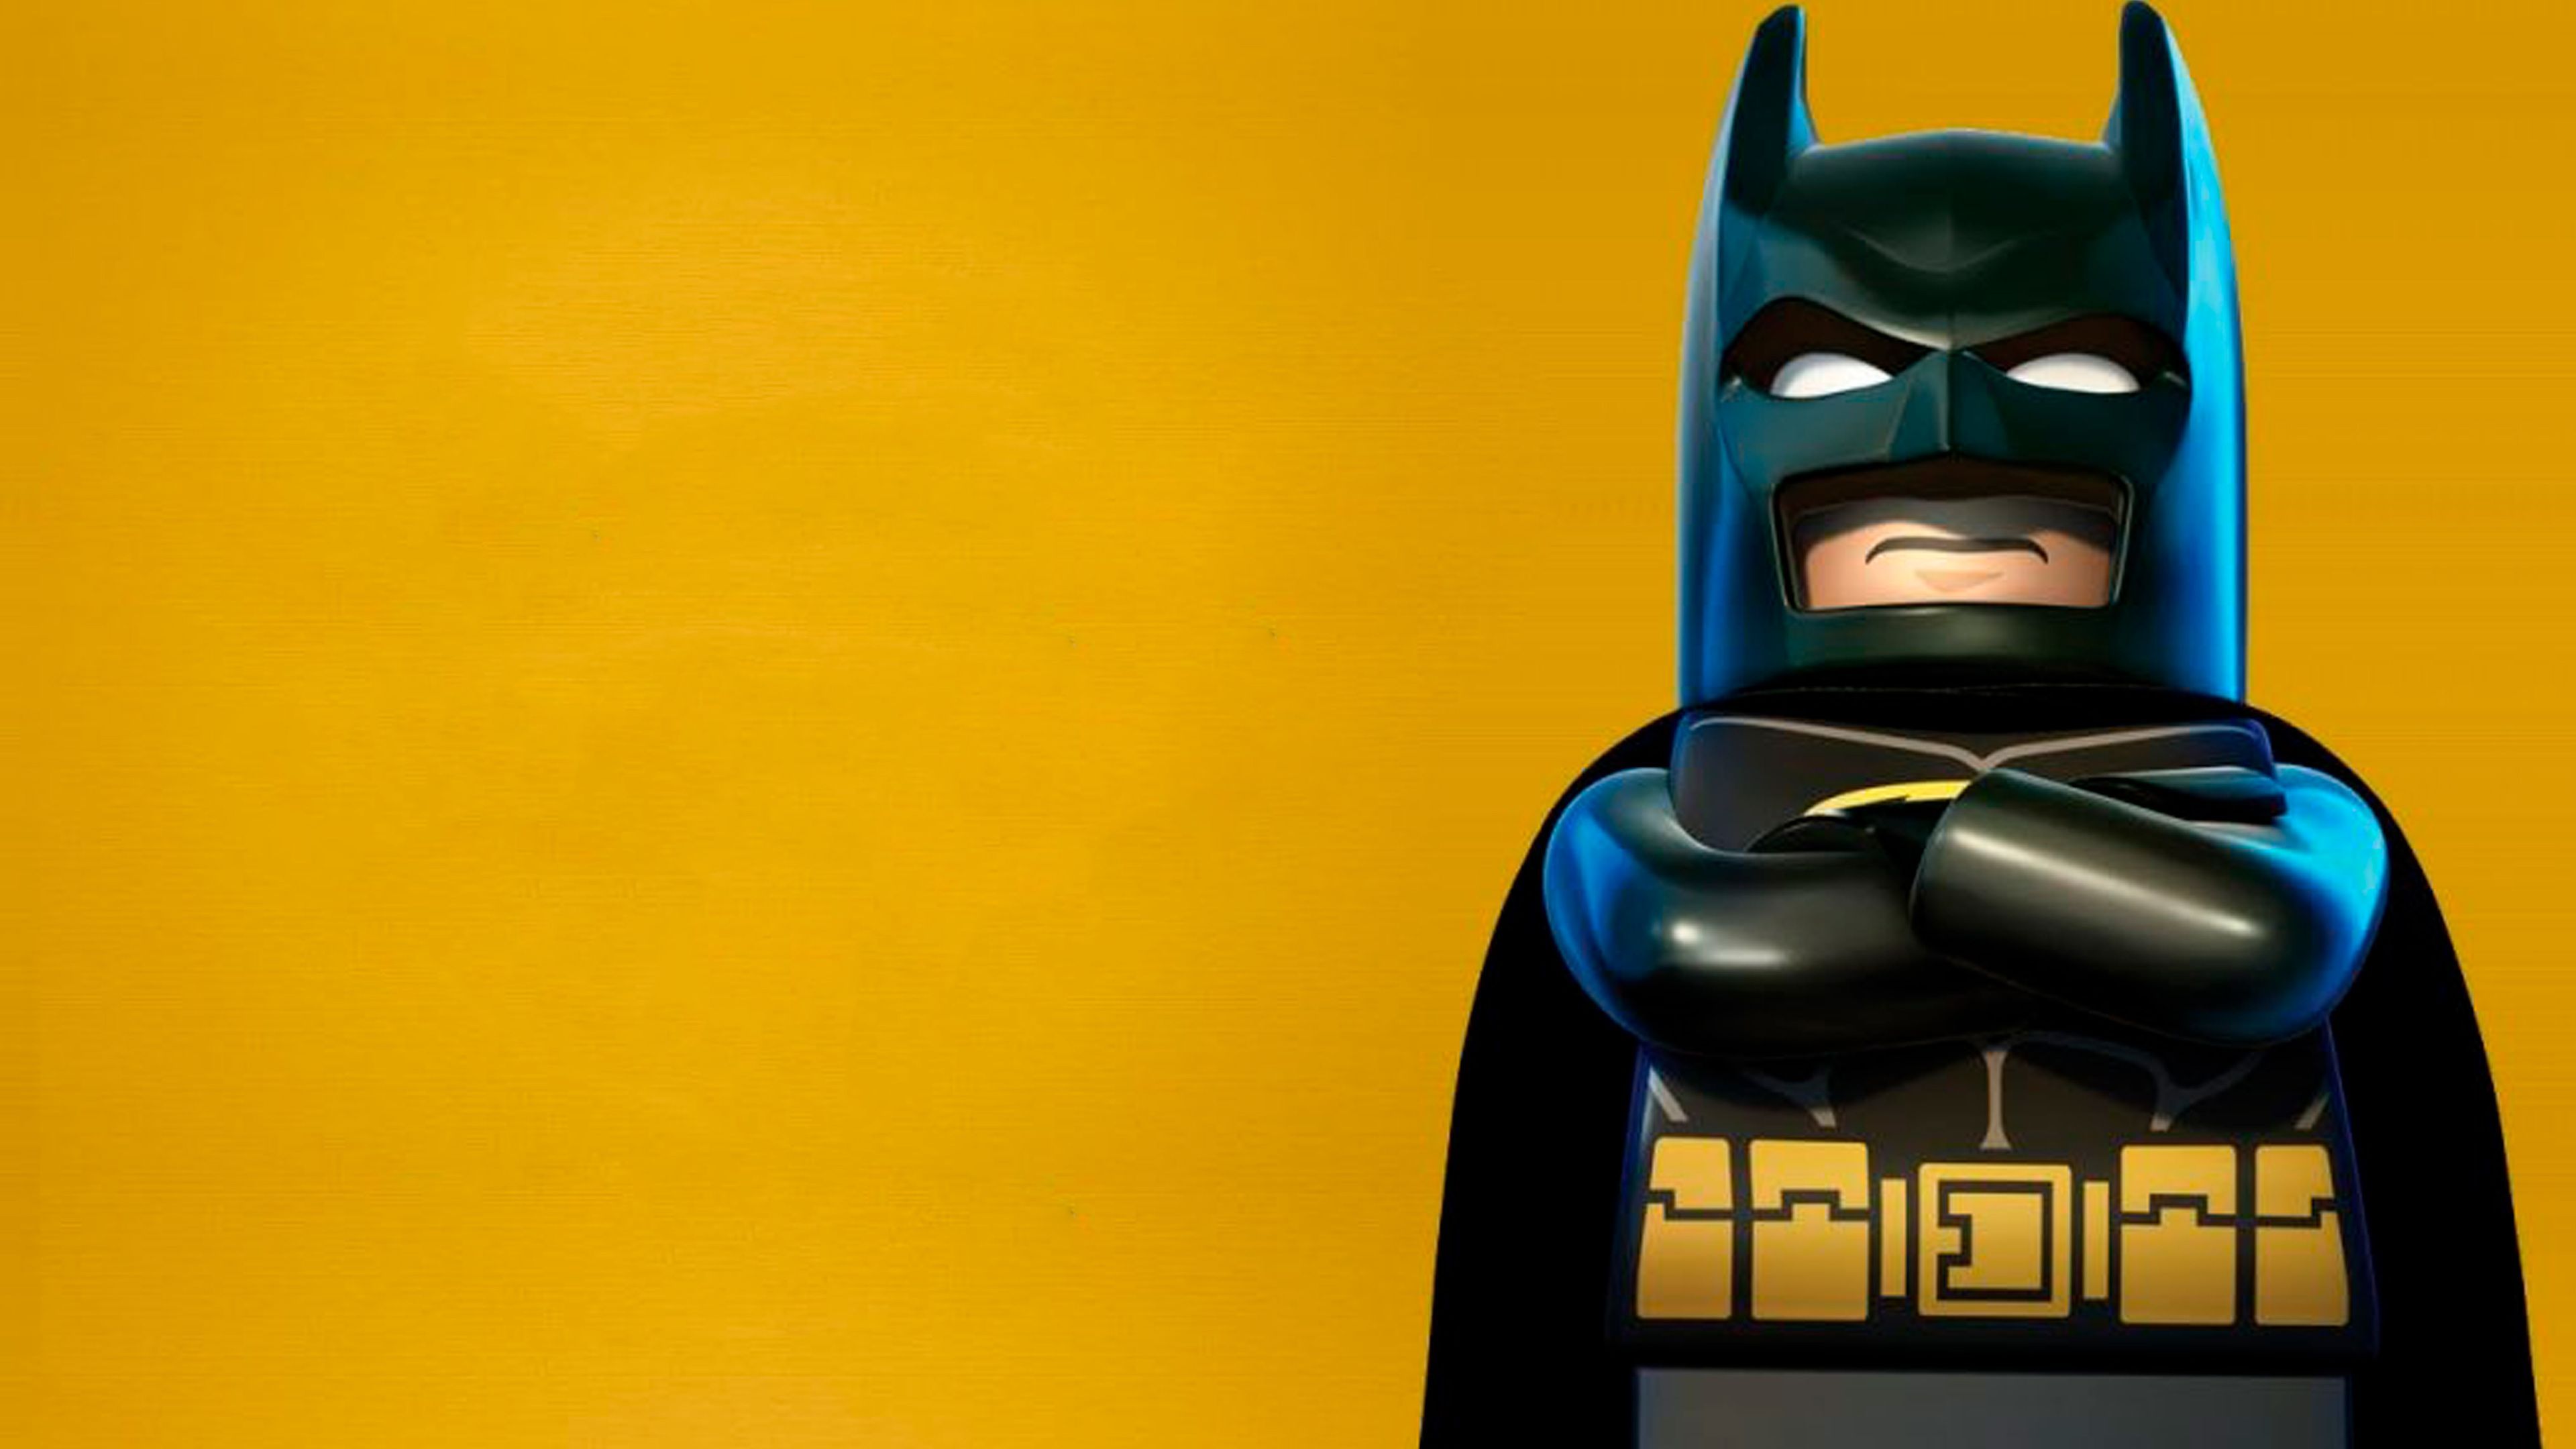 Lego Batman the lego batman movie wallpaper, movies wallpaper, hd- wallpaper, batman wallpaper, animated. Lego batman wallpaper, Batman wallpaper, Lego batman